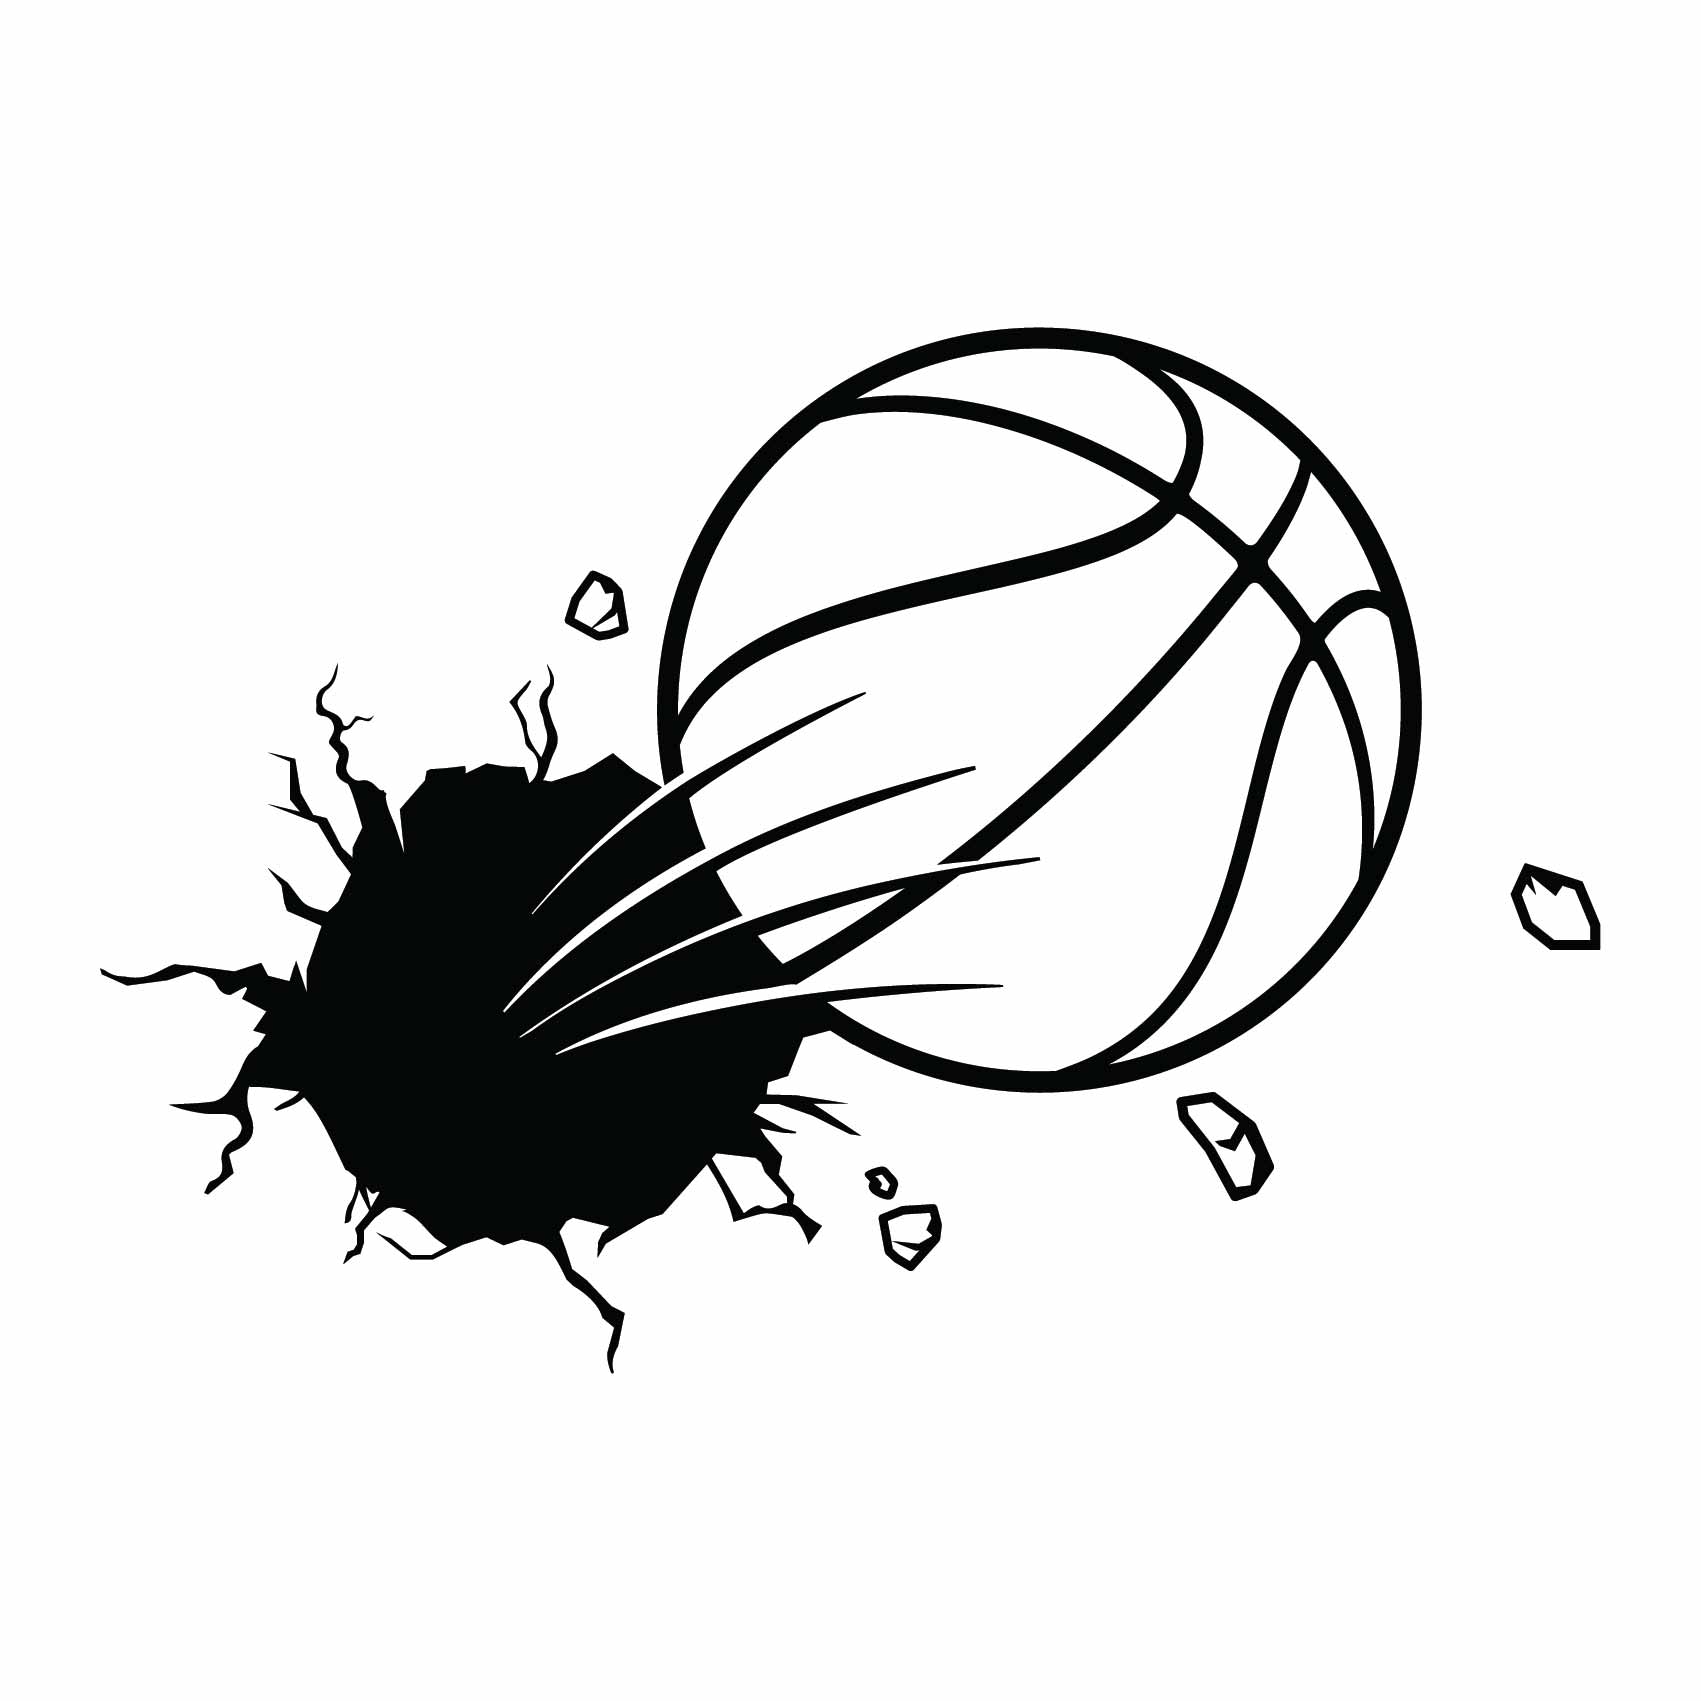 stickers-ballon-basket-ref46sport-stickers-muraux-sport-autocollant-deco-enfant-salon-chambre-sticker-mural-basketball-decoration-(2)